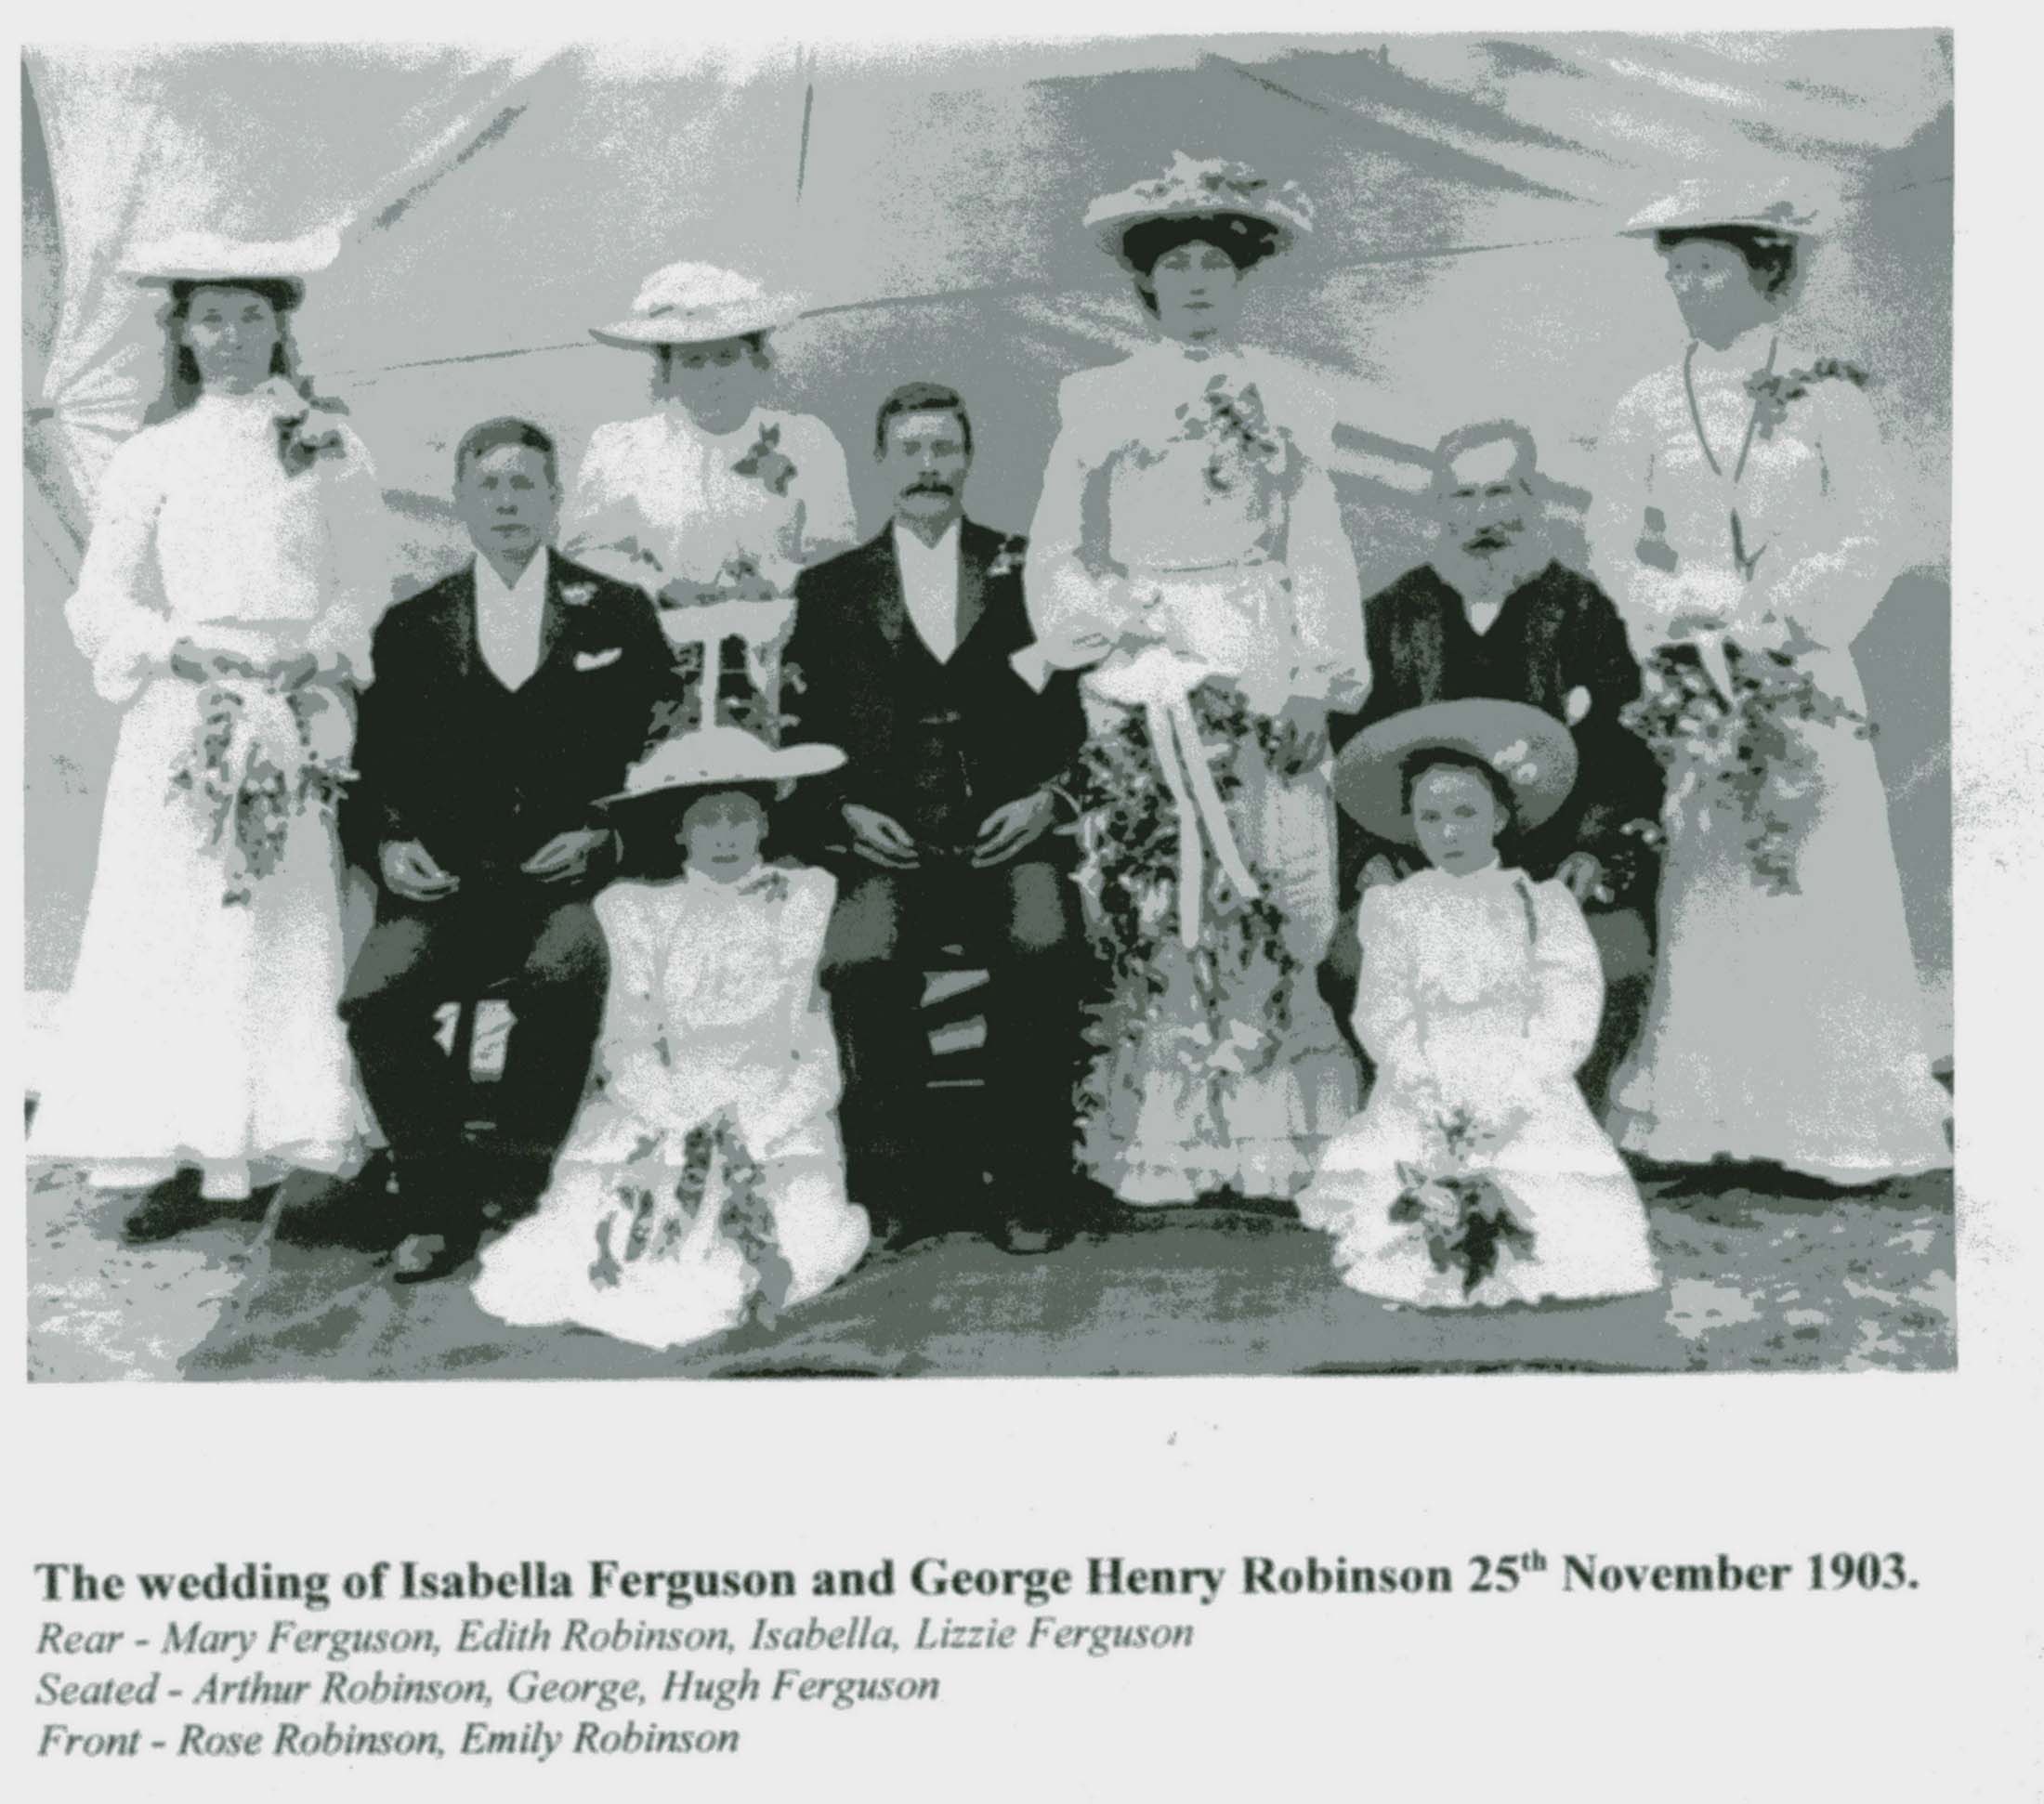 Isabella Ferguson & George Henry Robinson's Weddin